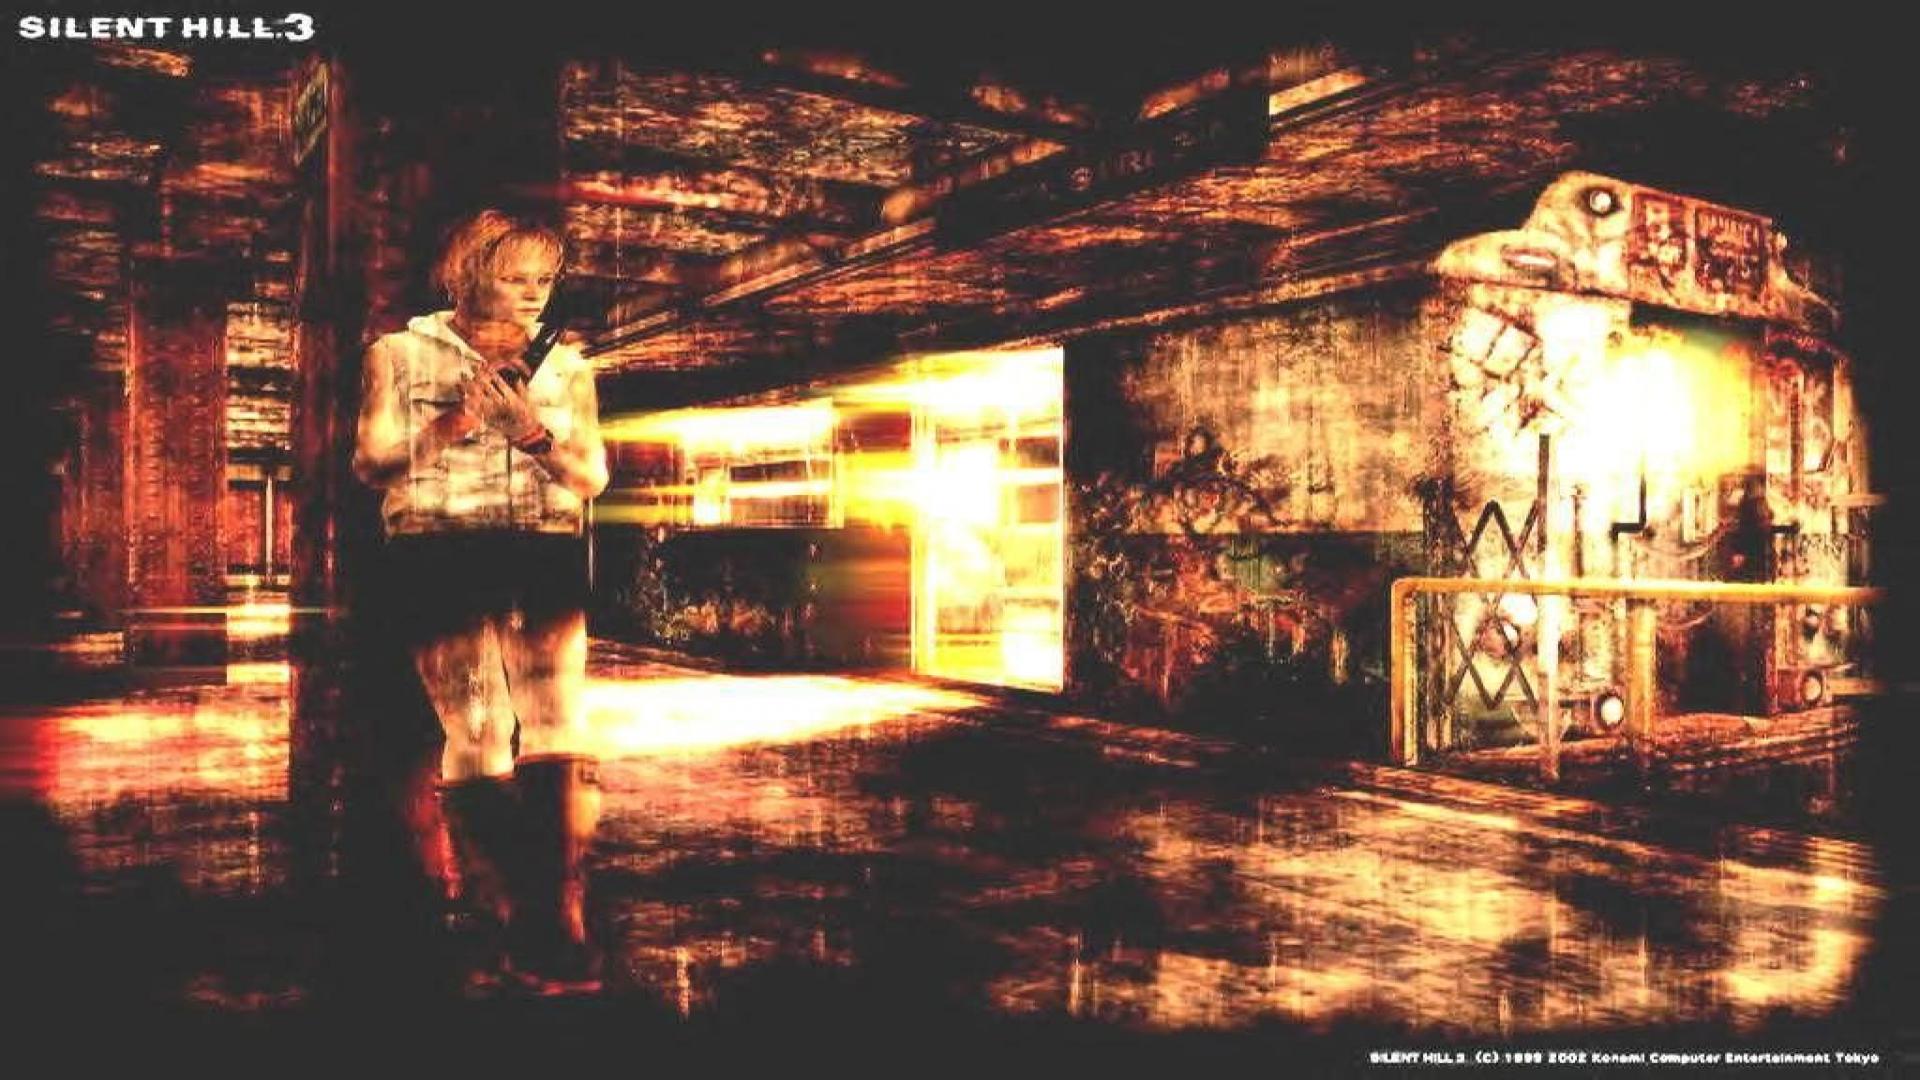 Wallpaper Silenthill3 Jpg At For Silent Hill On Xbox